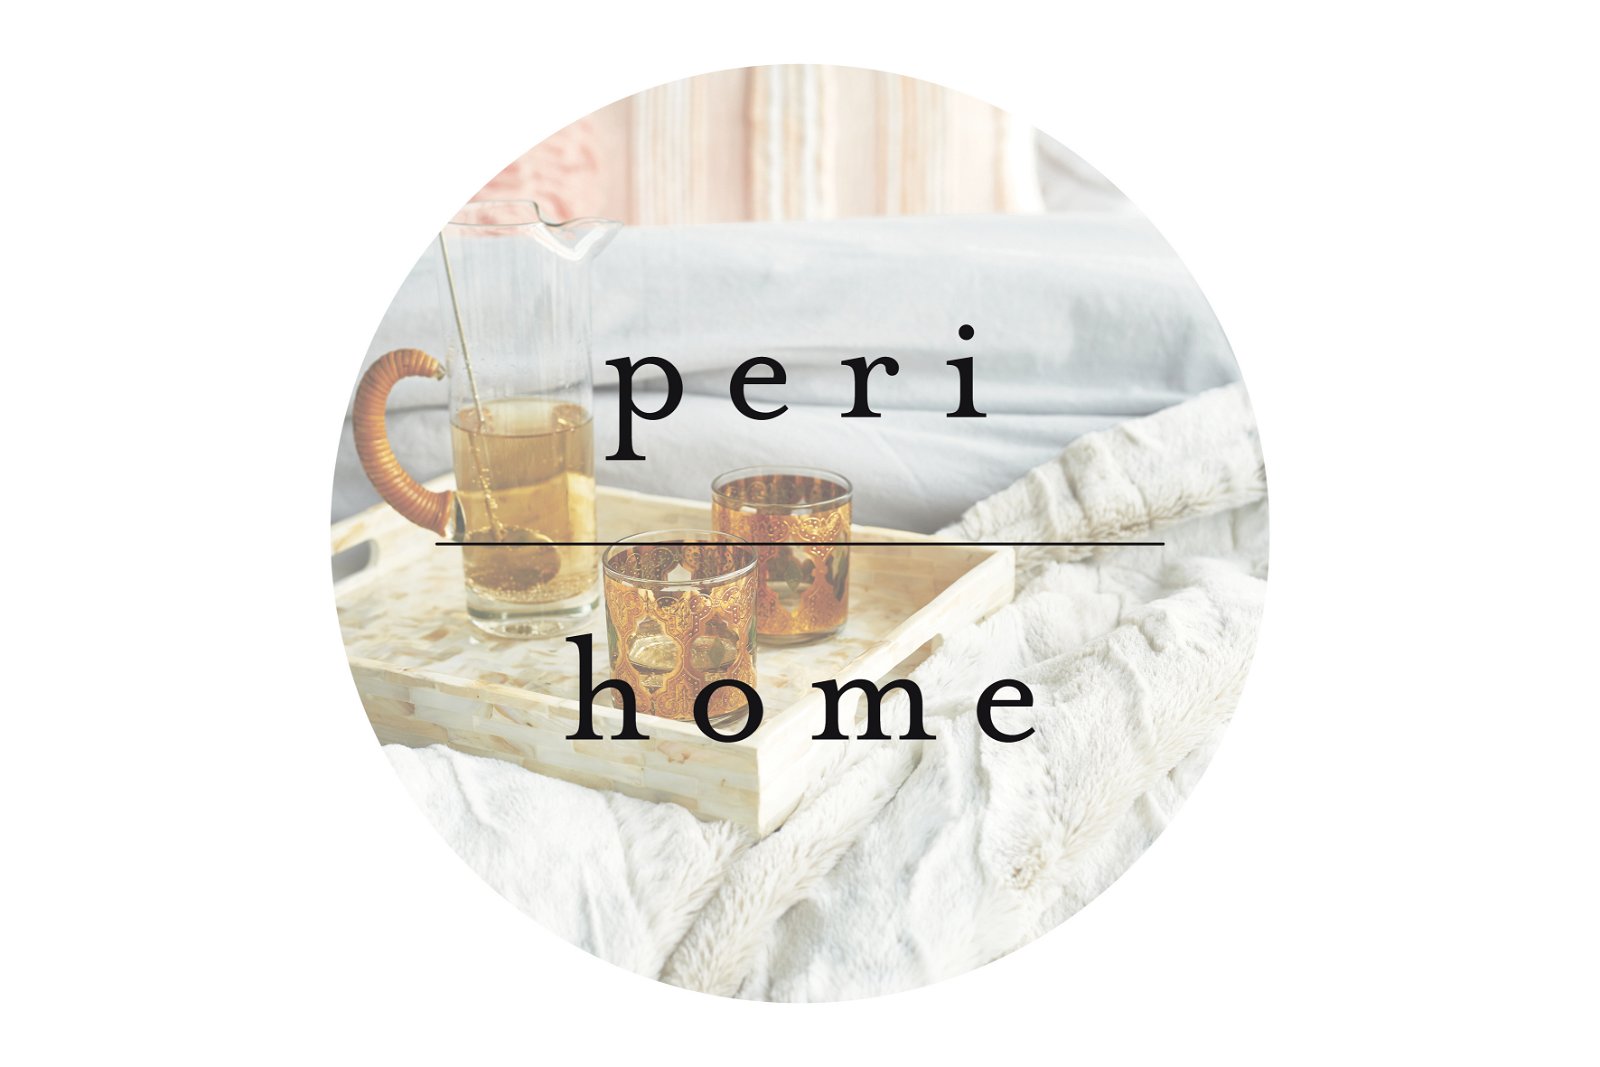 Peri Home Bedding